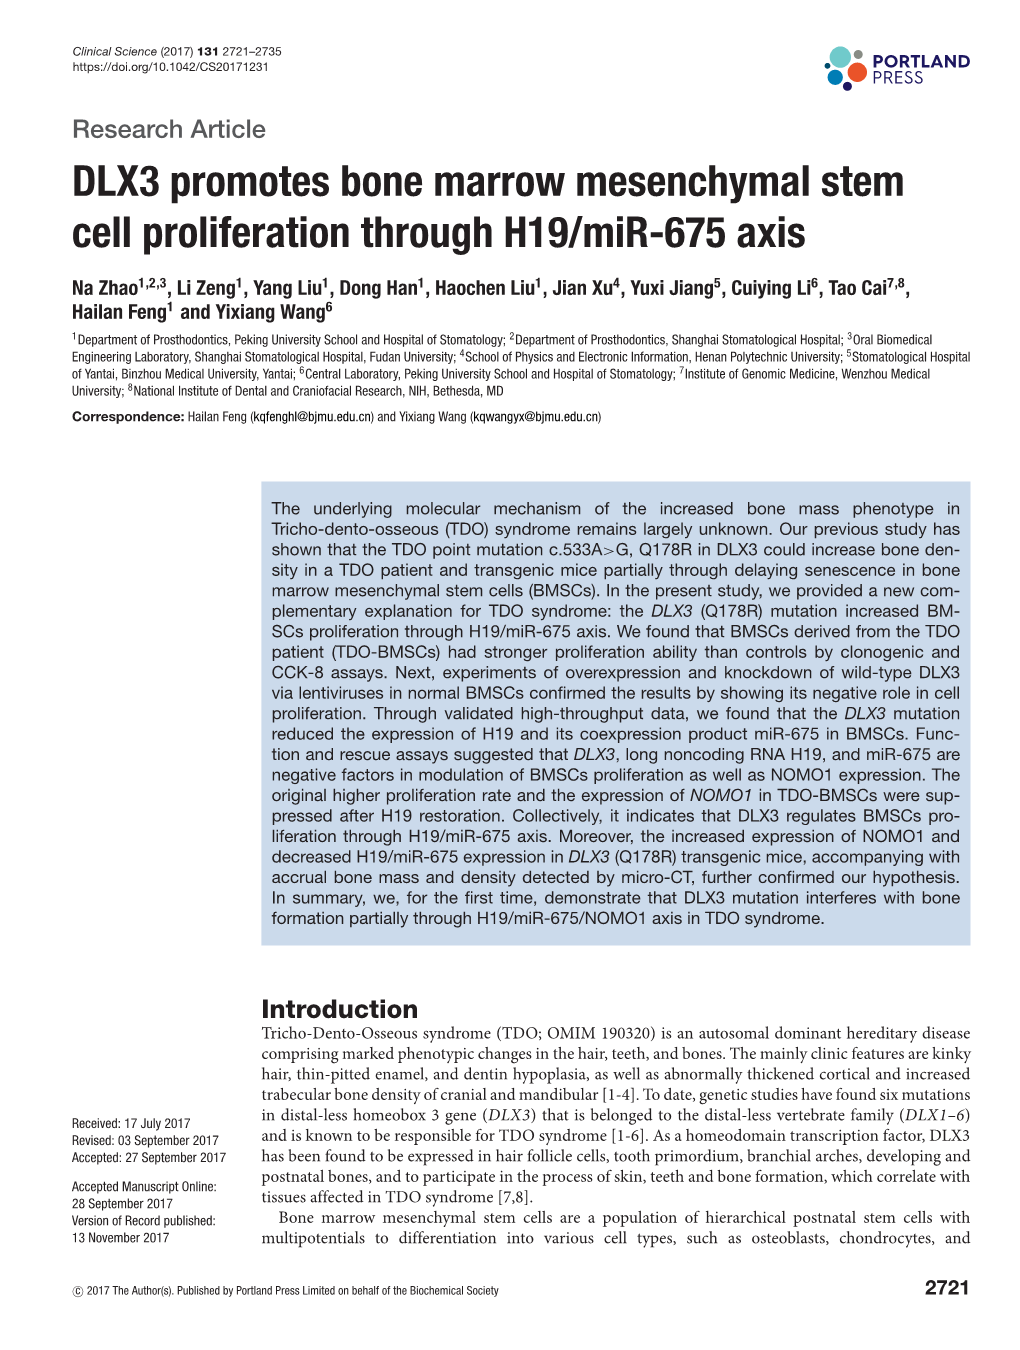 DLX3 Promotes Bone Marrow Mesenchymal Stem Cell Proliferation Through H19/Mir-675 Axis